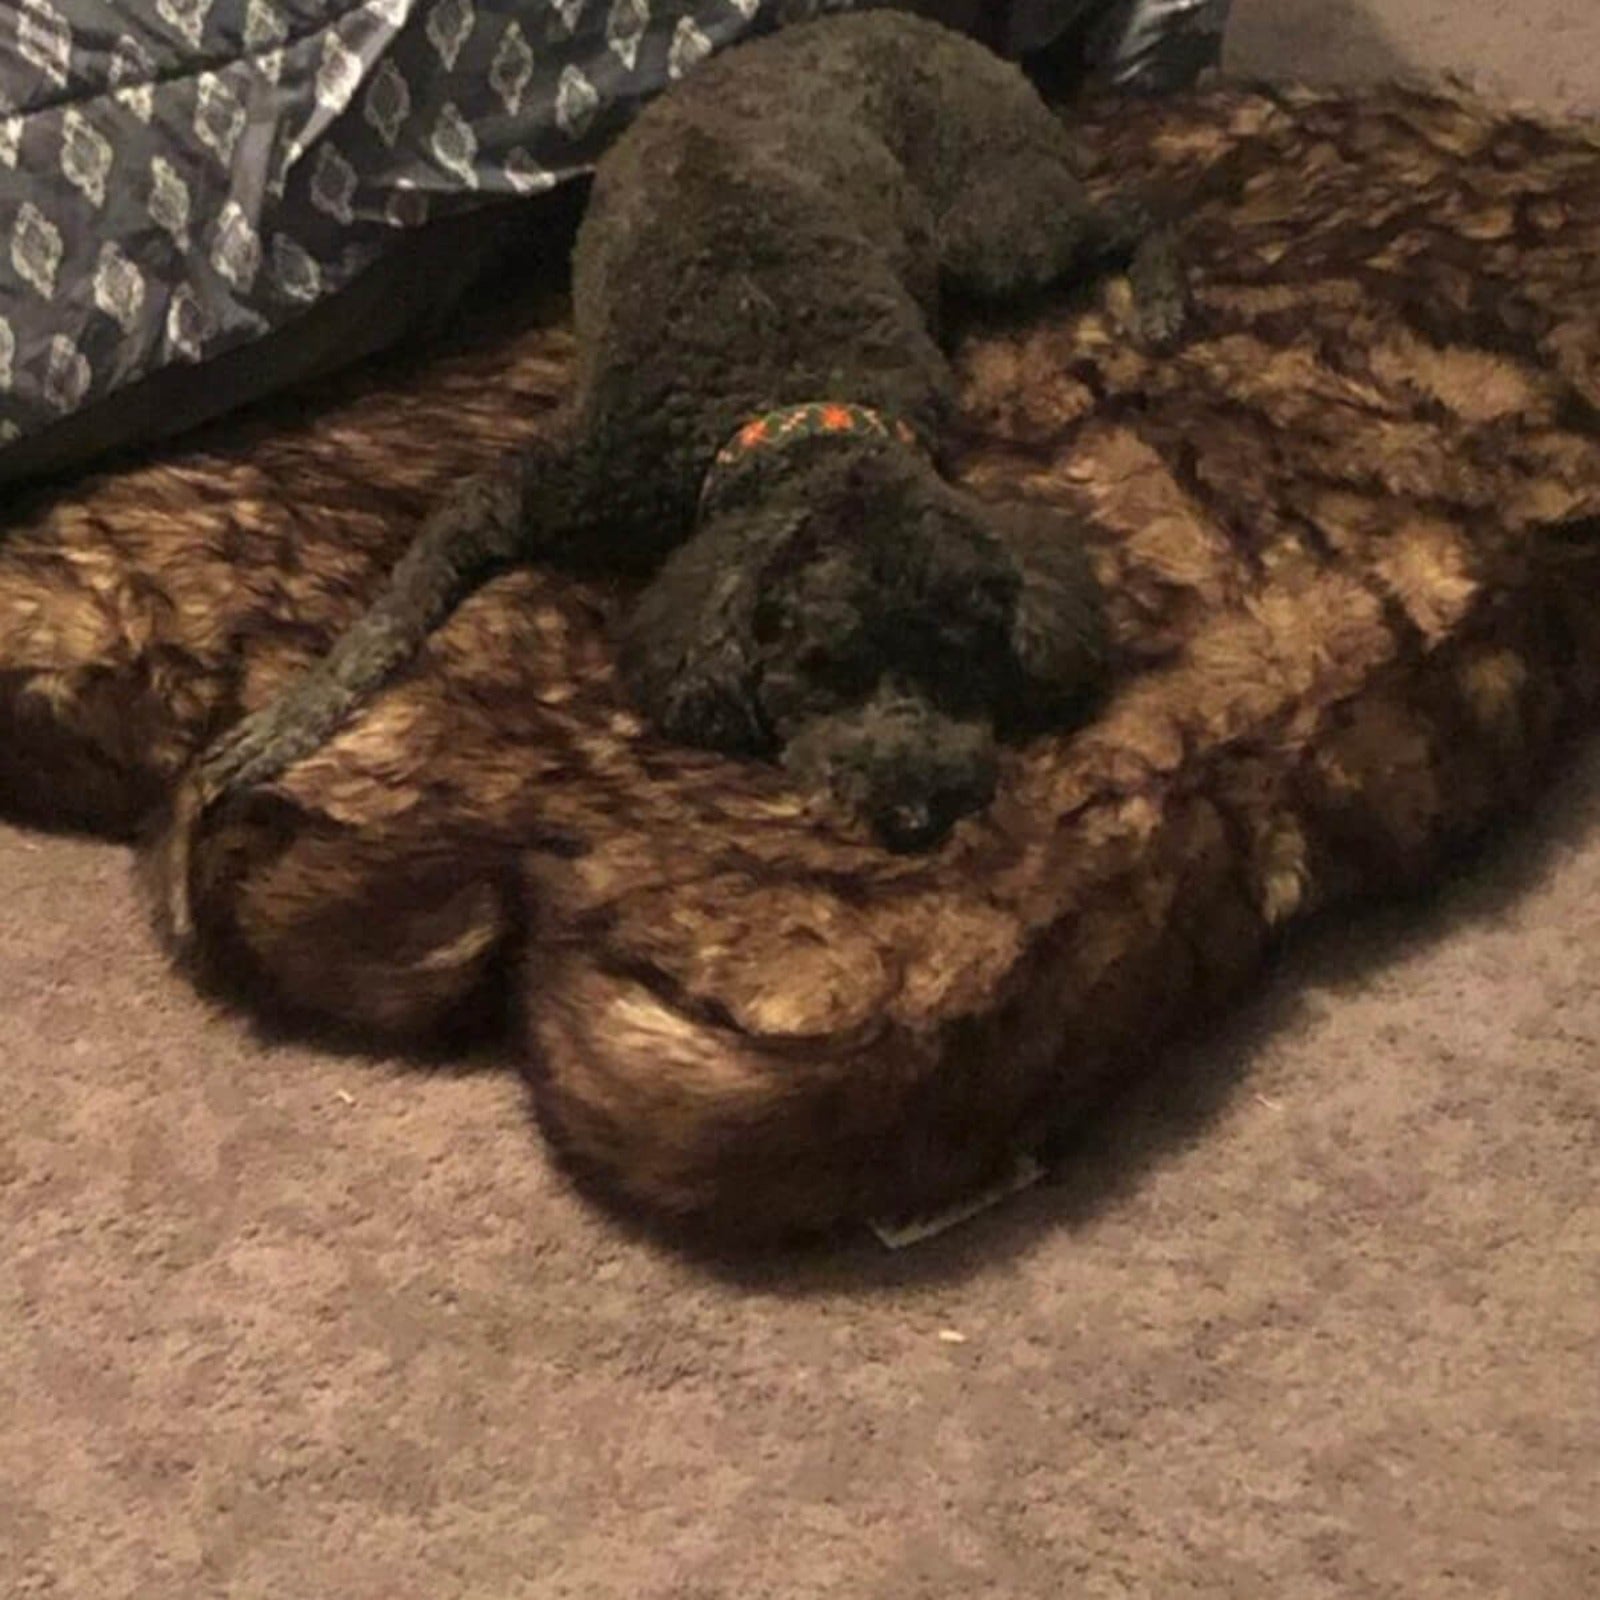 Laifug Faux Fur Dog Bed